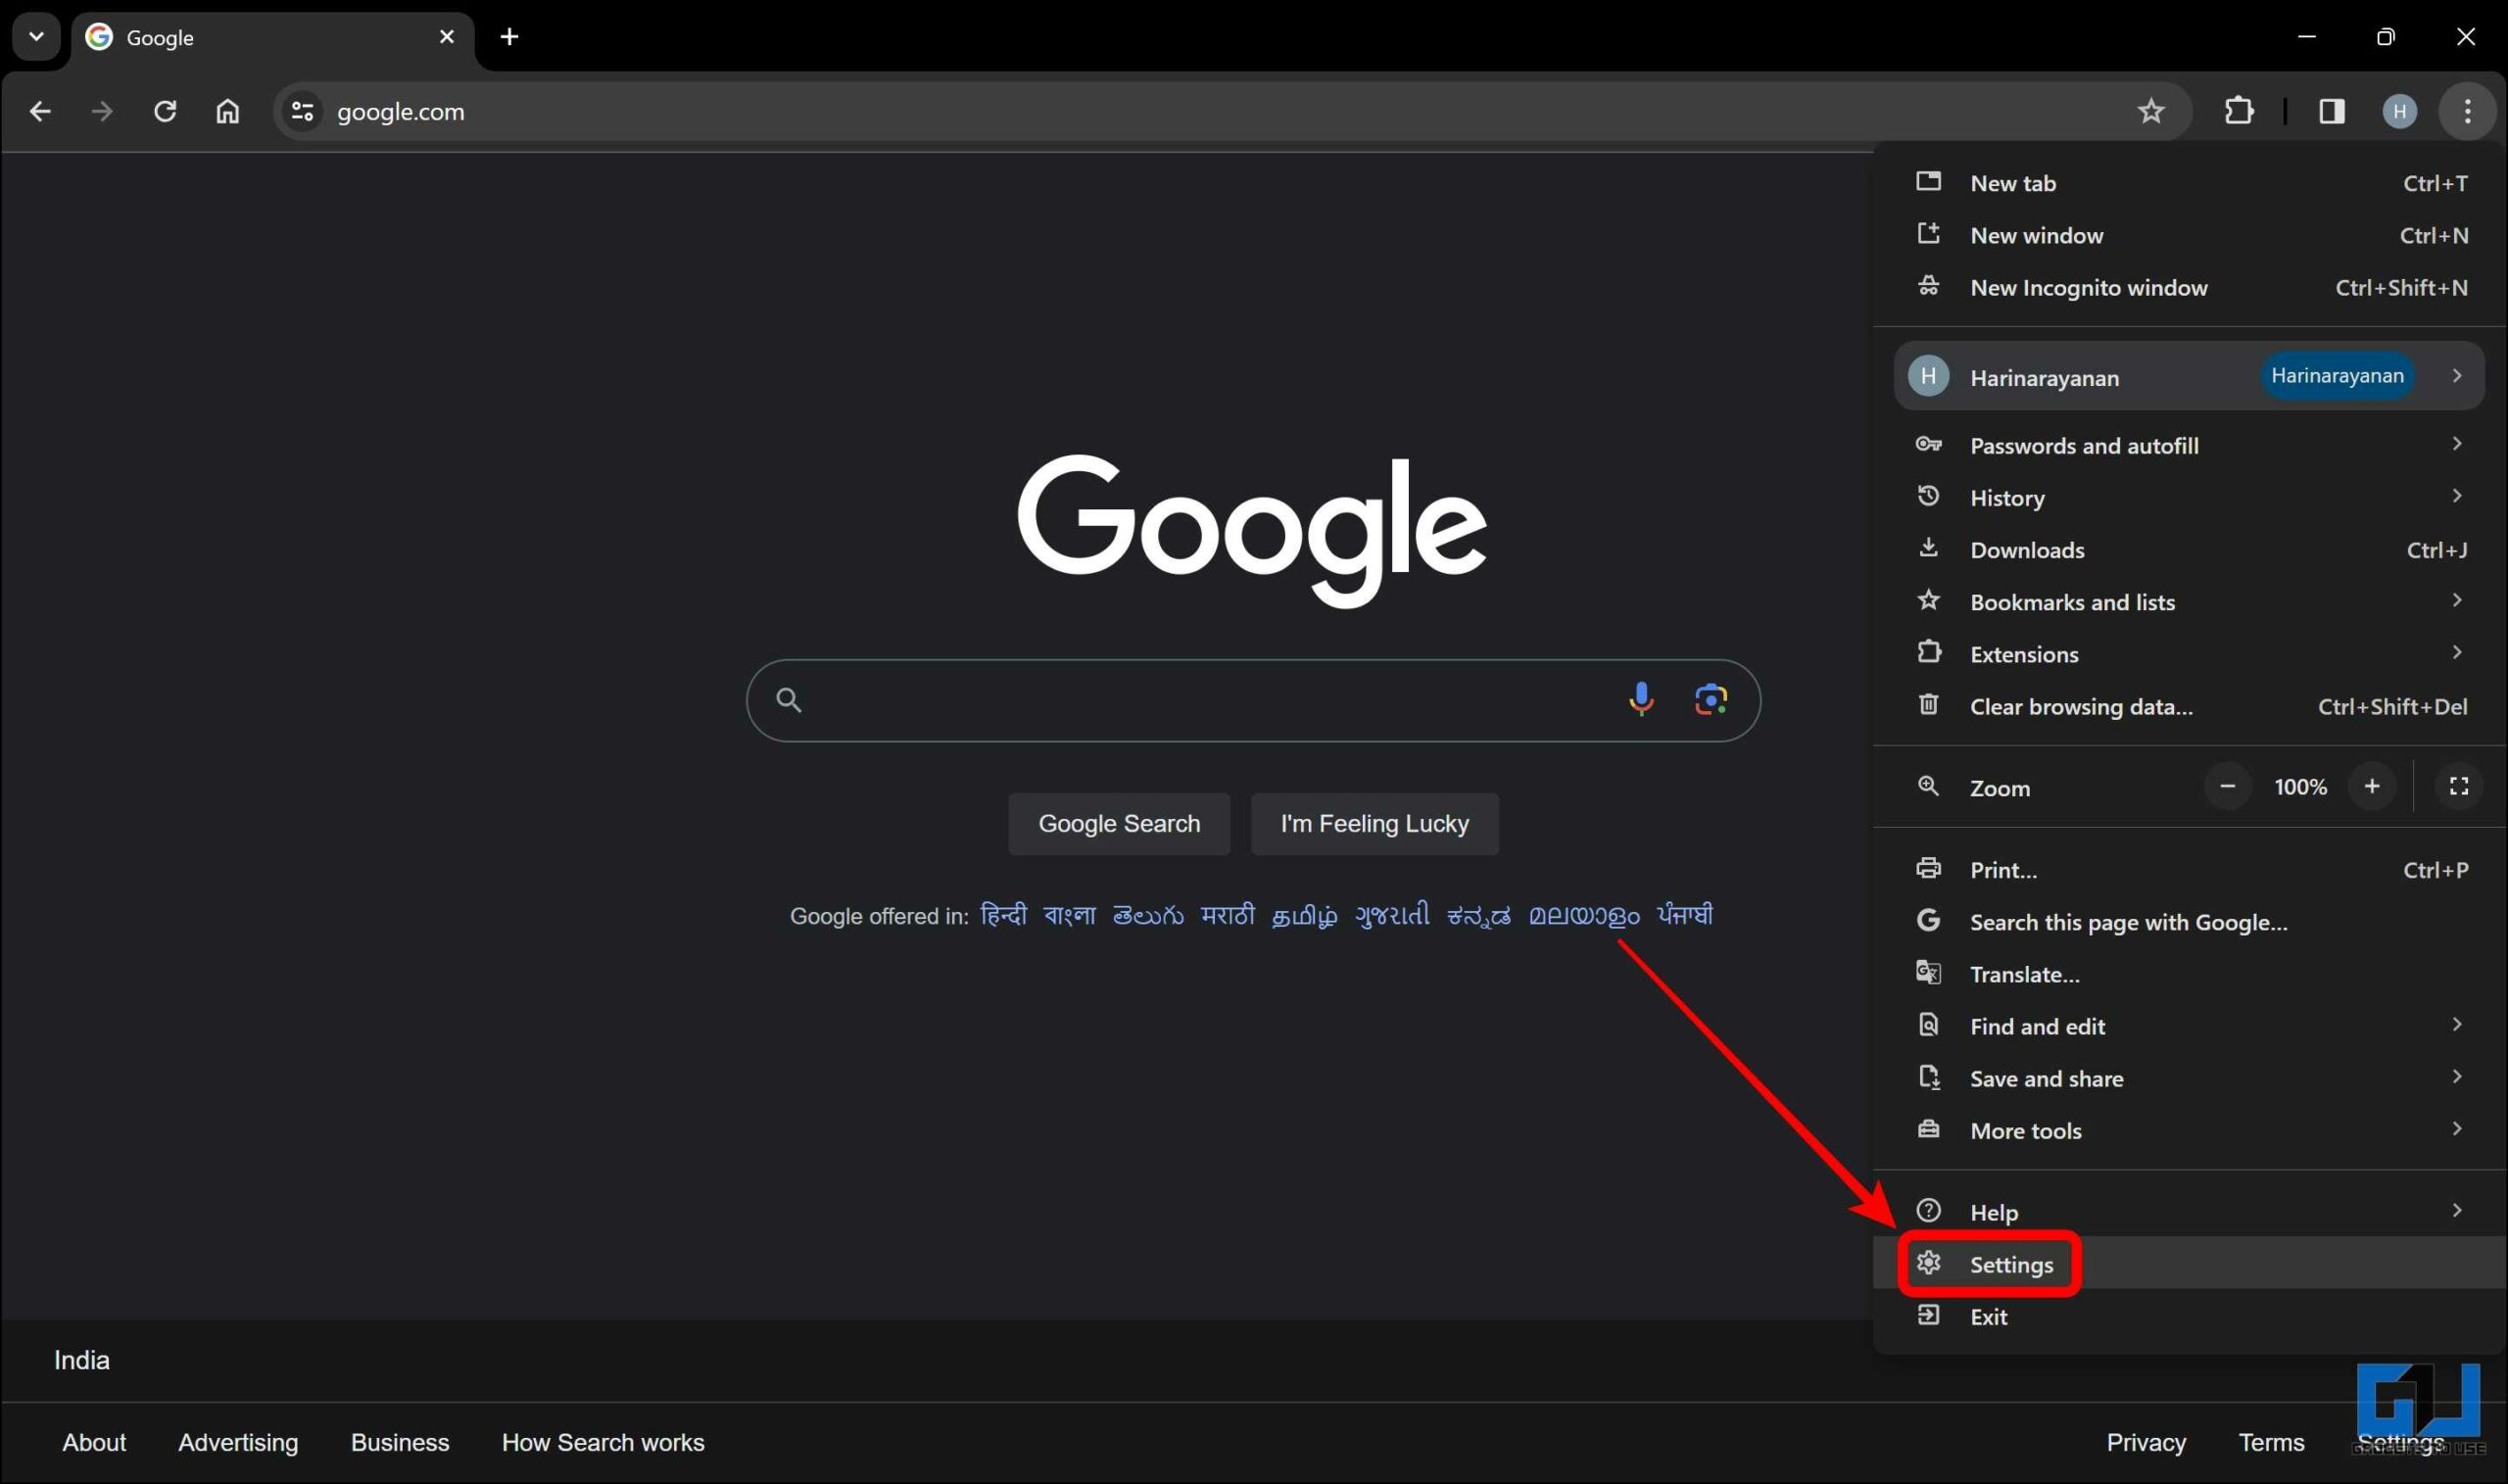 Settings under Google Chrome three dots menu